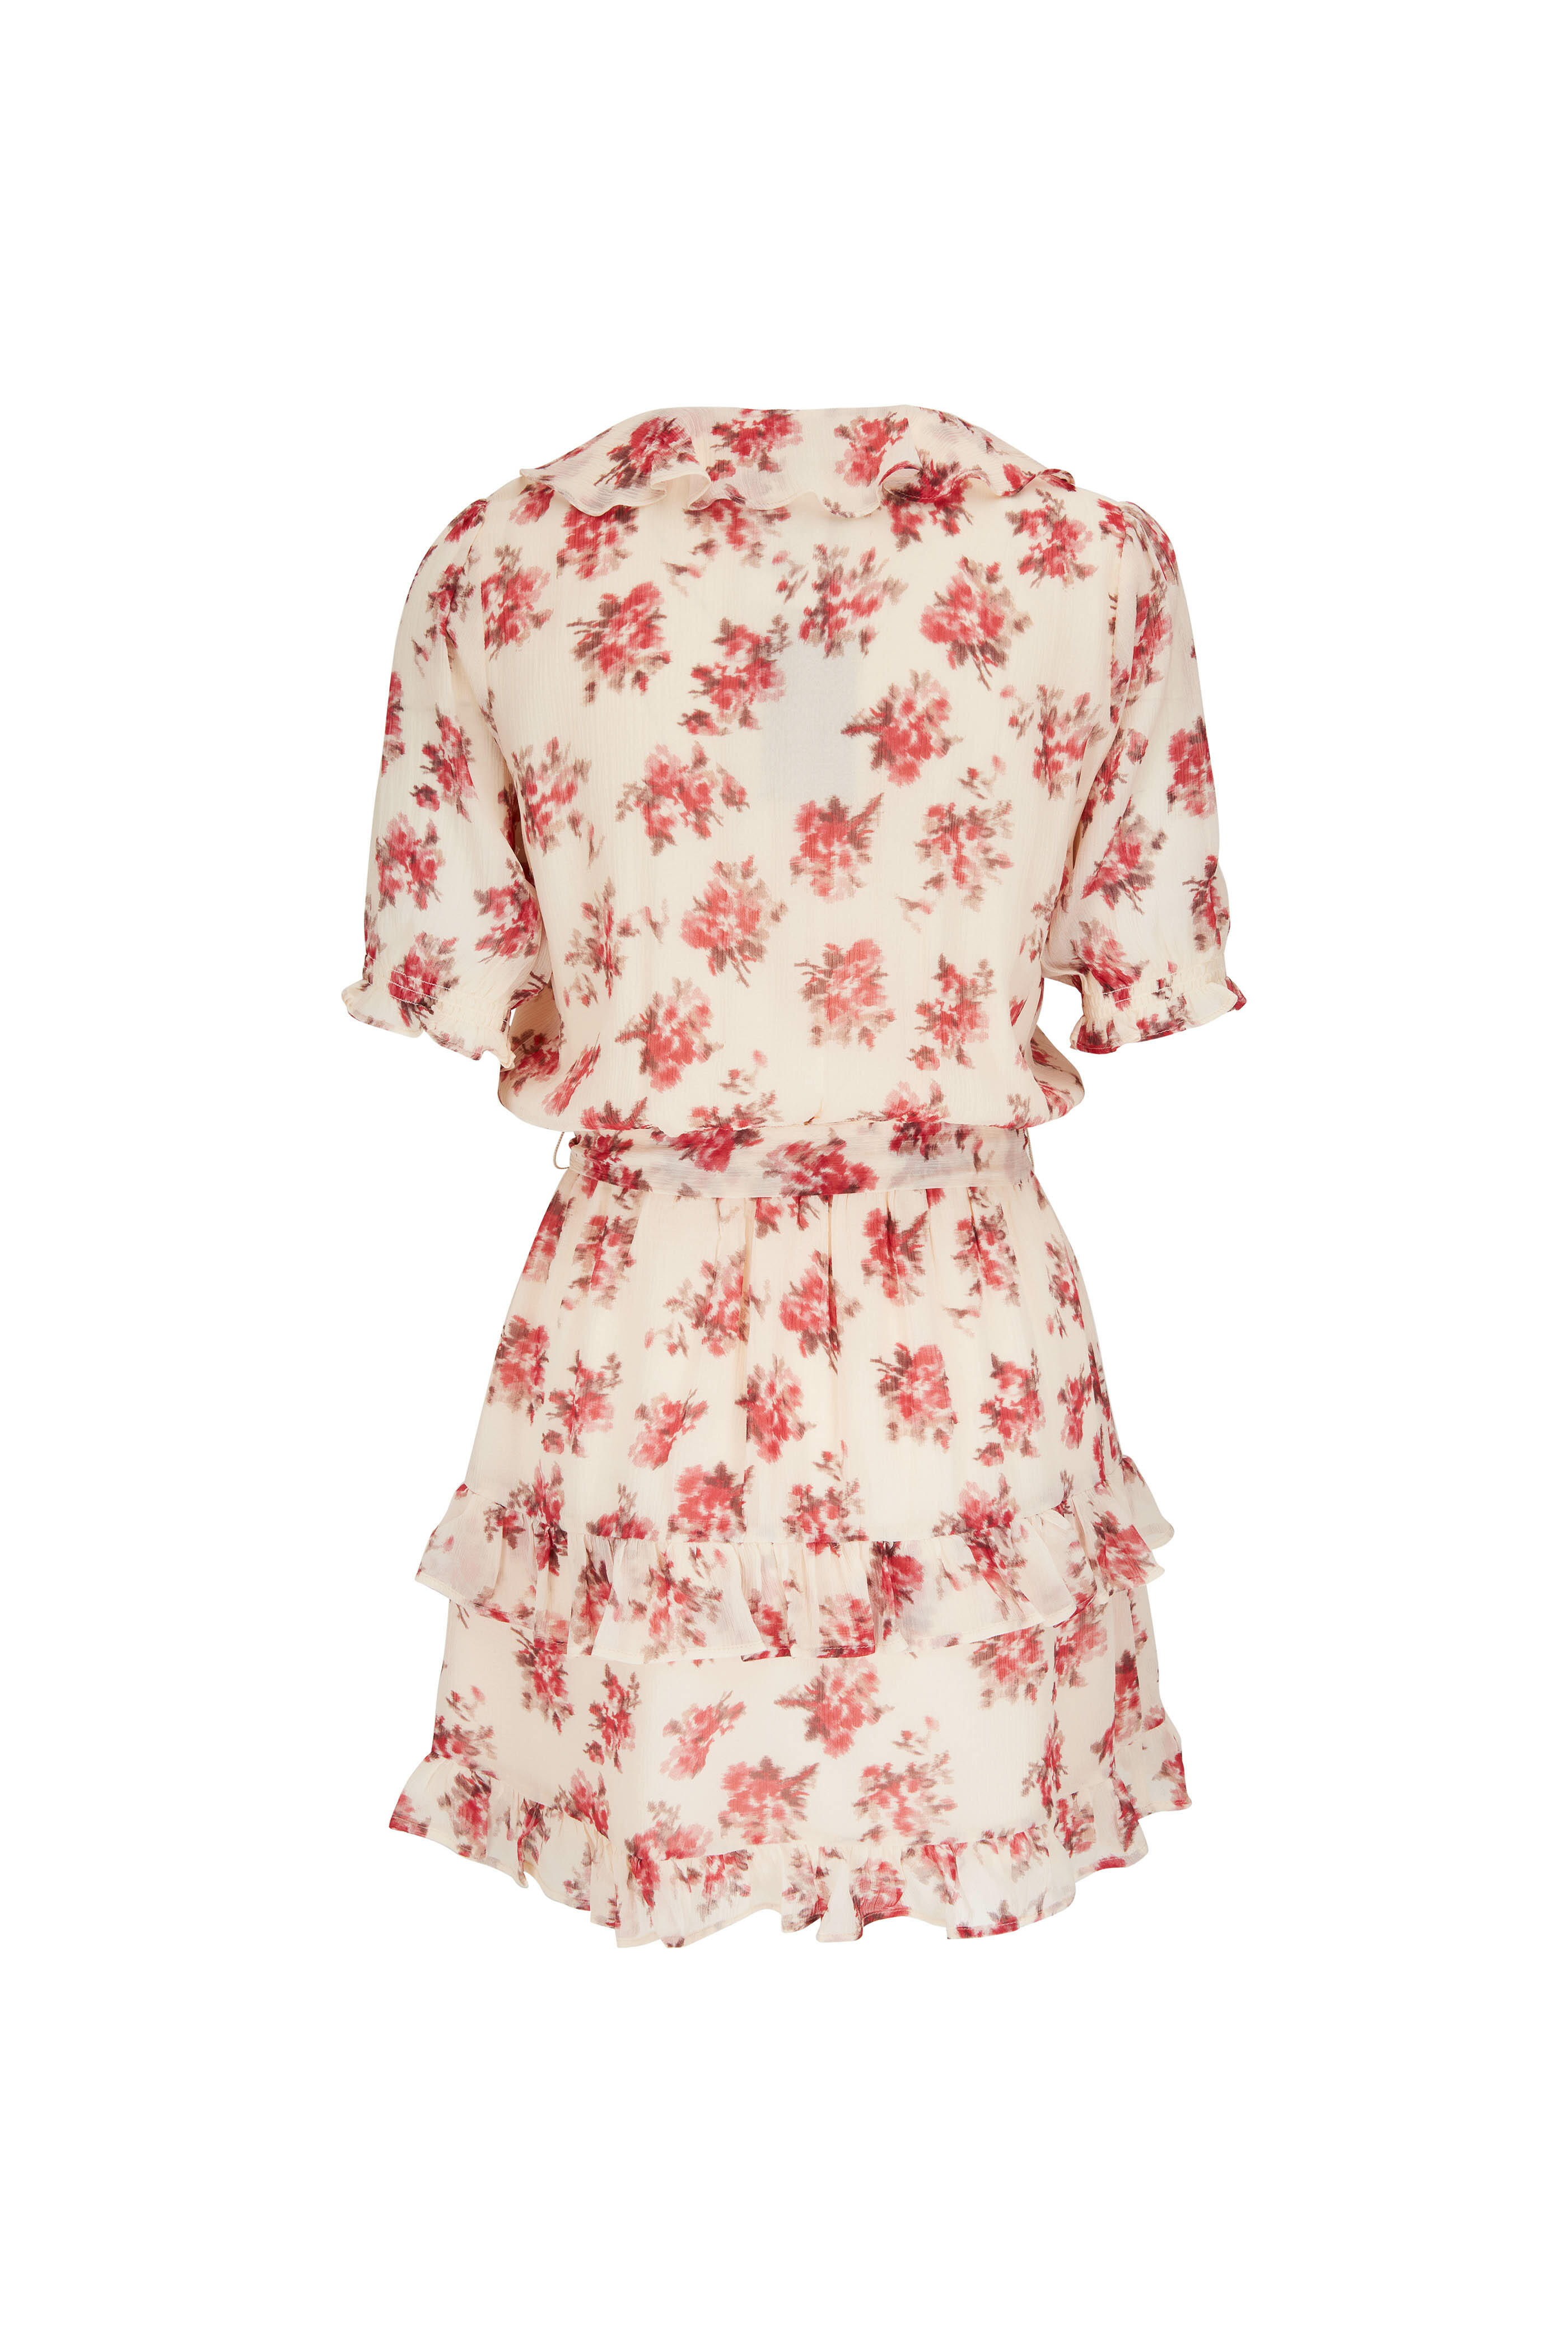 PAIGE - Evonna Cream & Red Floral Print Mini Dress